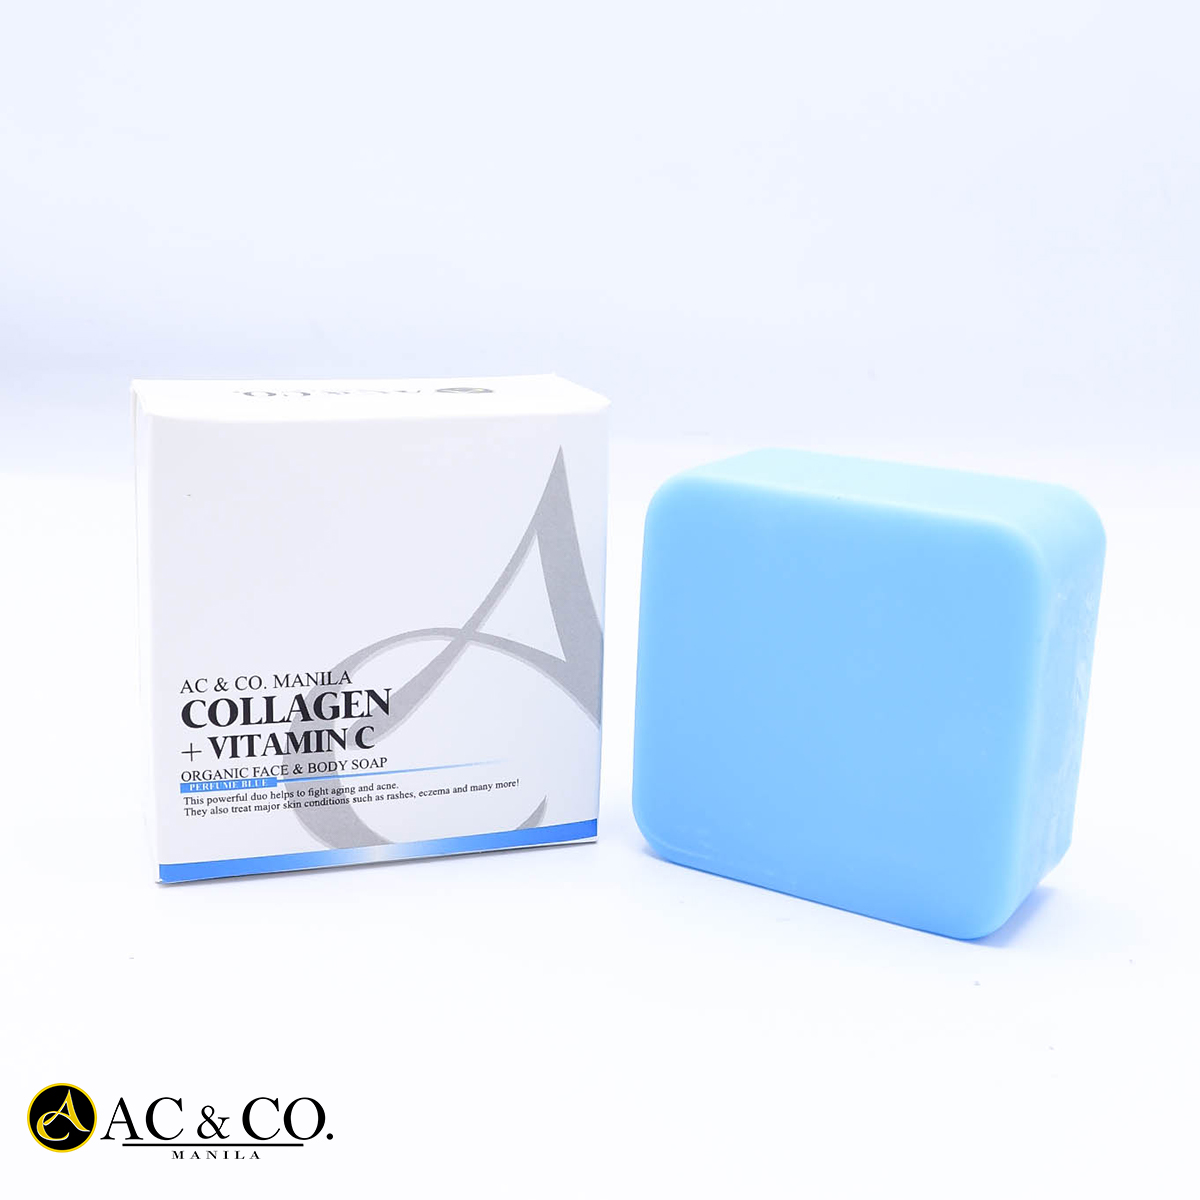 blue bar soap